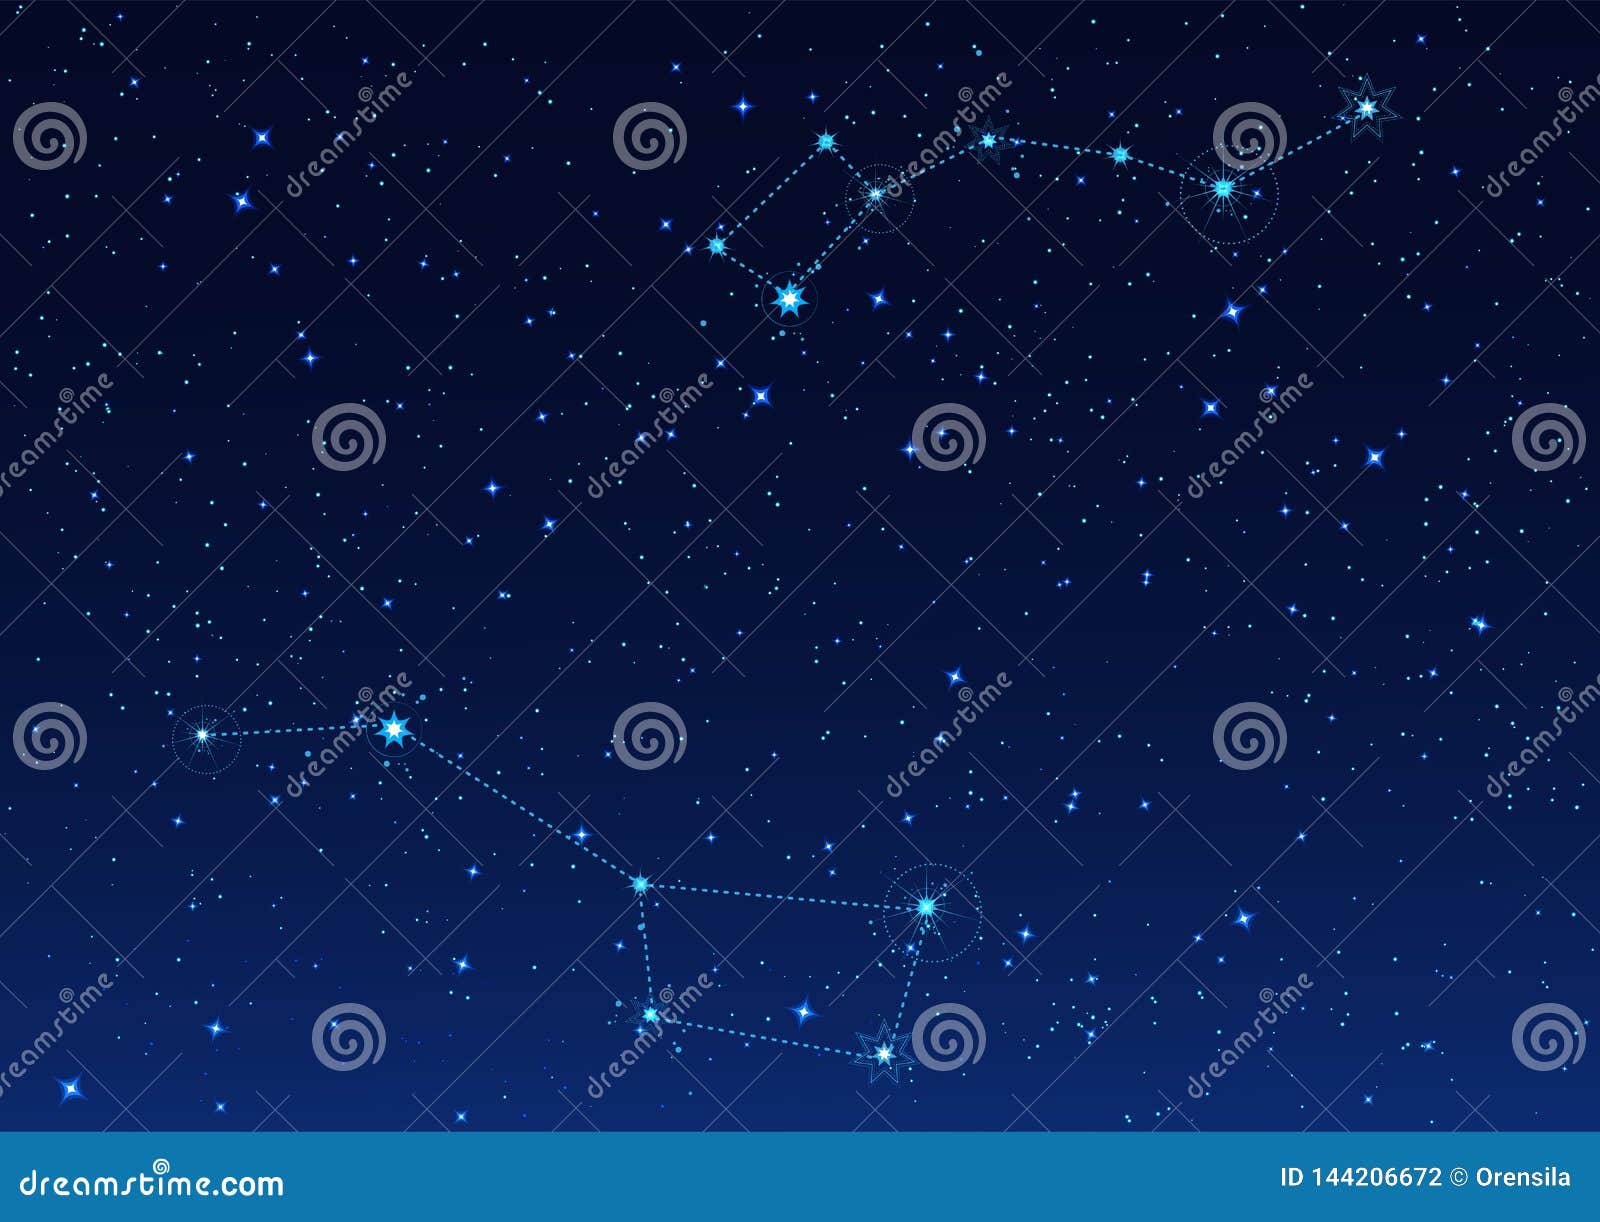 big and small dipper constellation. polar star. night starry sky